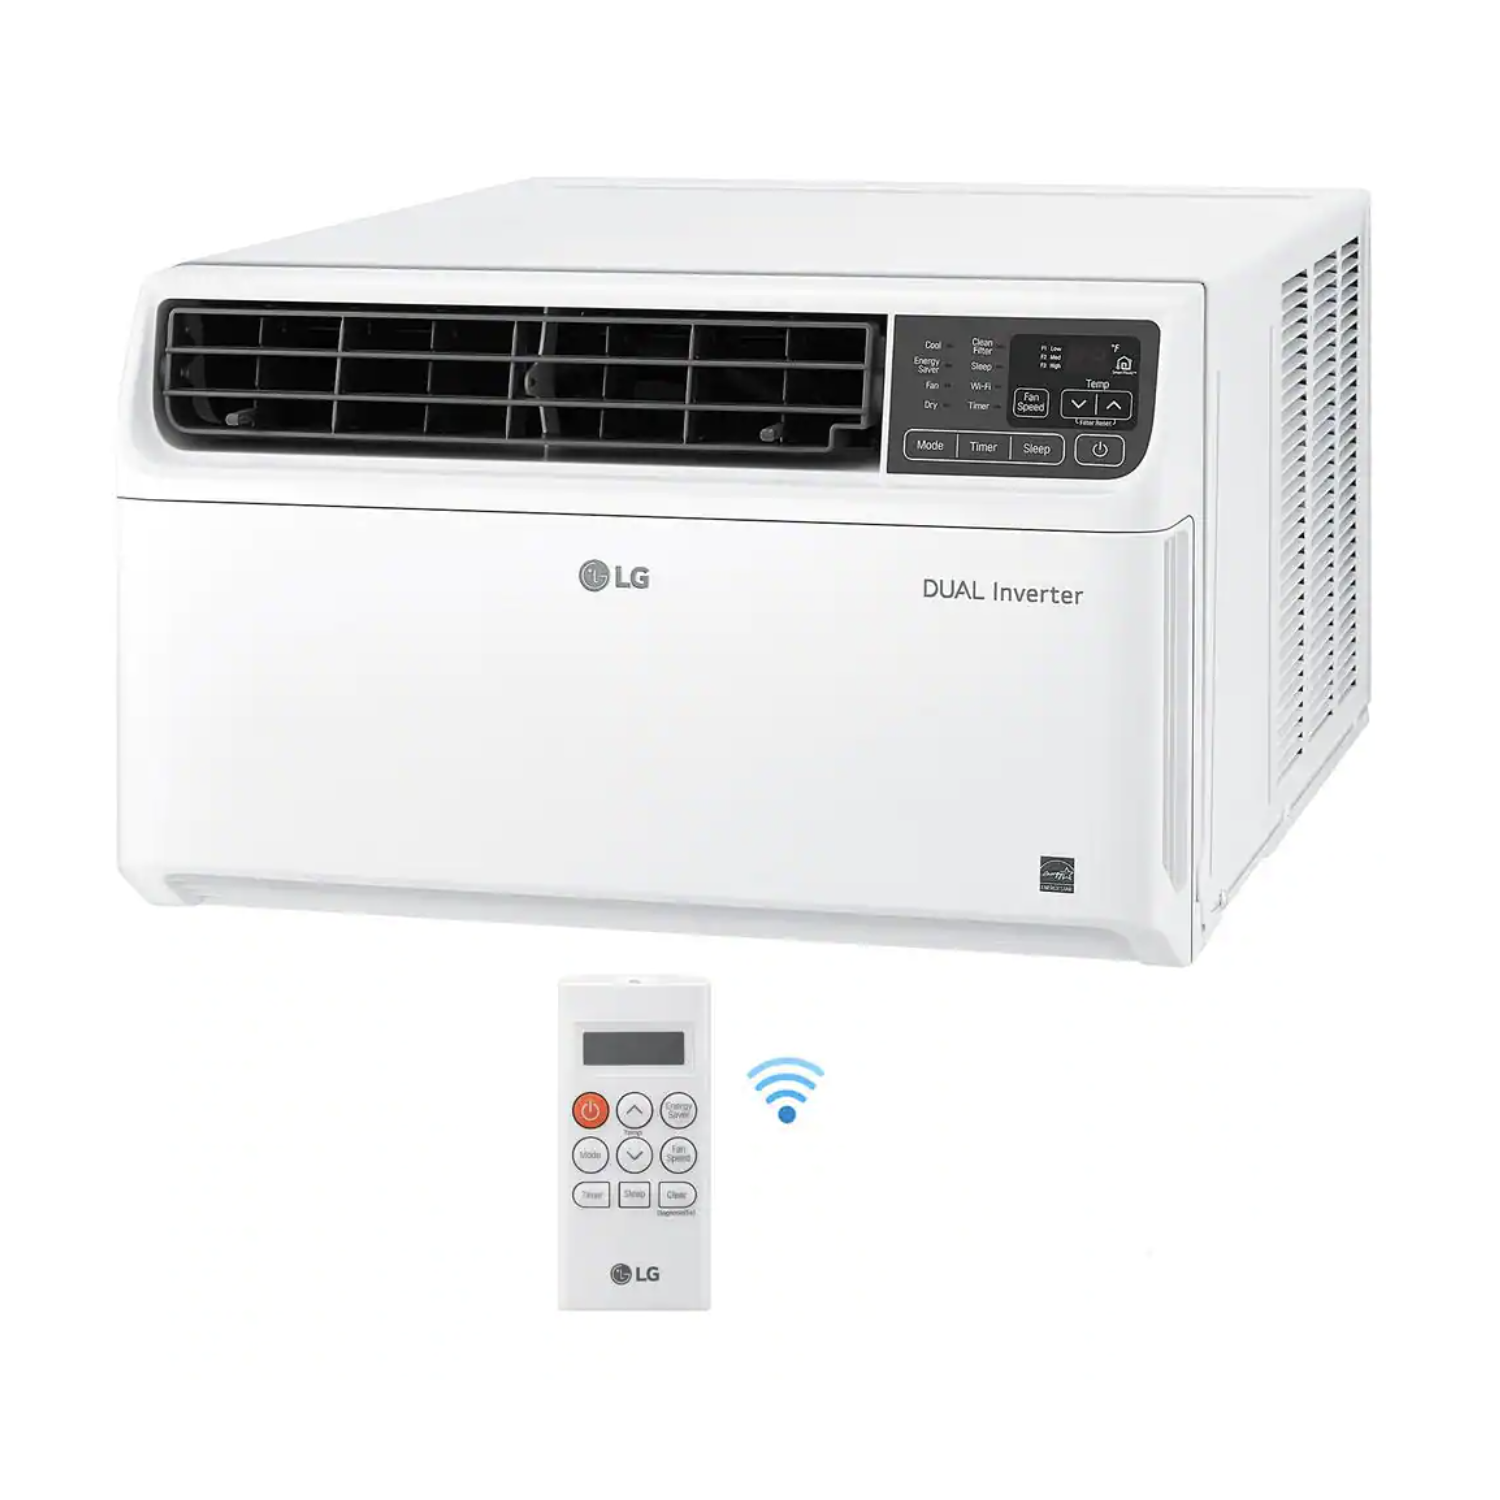 LG 23,500 BTU Dual Inverter Smart (Wi-Fi) Window Air Conditioner, Cools 1440 Sq.Ft, Ultra Quiet, 35% Energy Savings, Works w/ LG ThinQ, Alexa, Google & Remote - 230 V (LW2422IVISM)